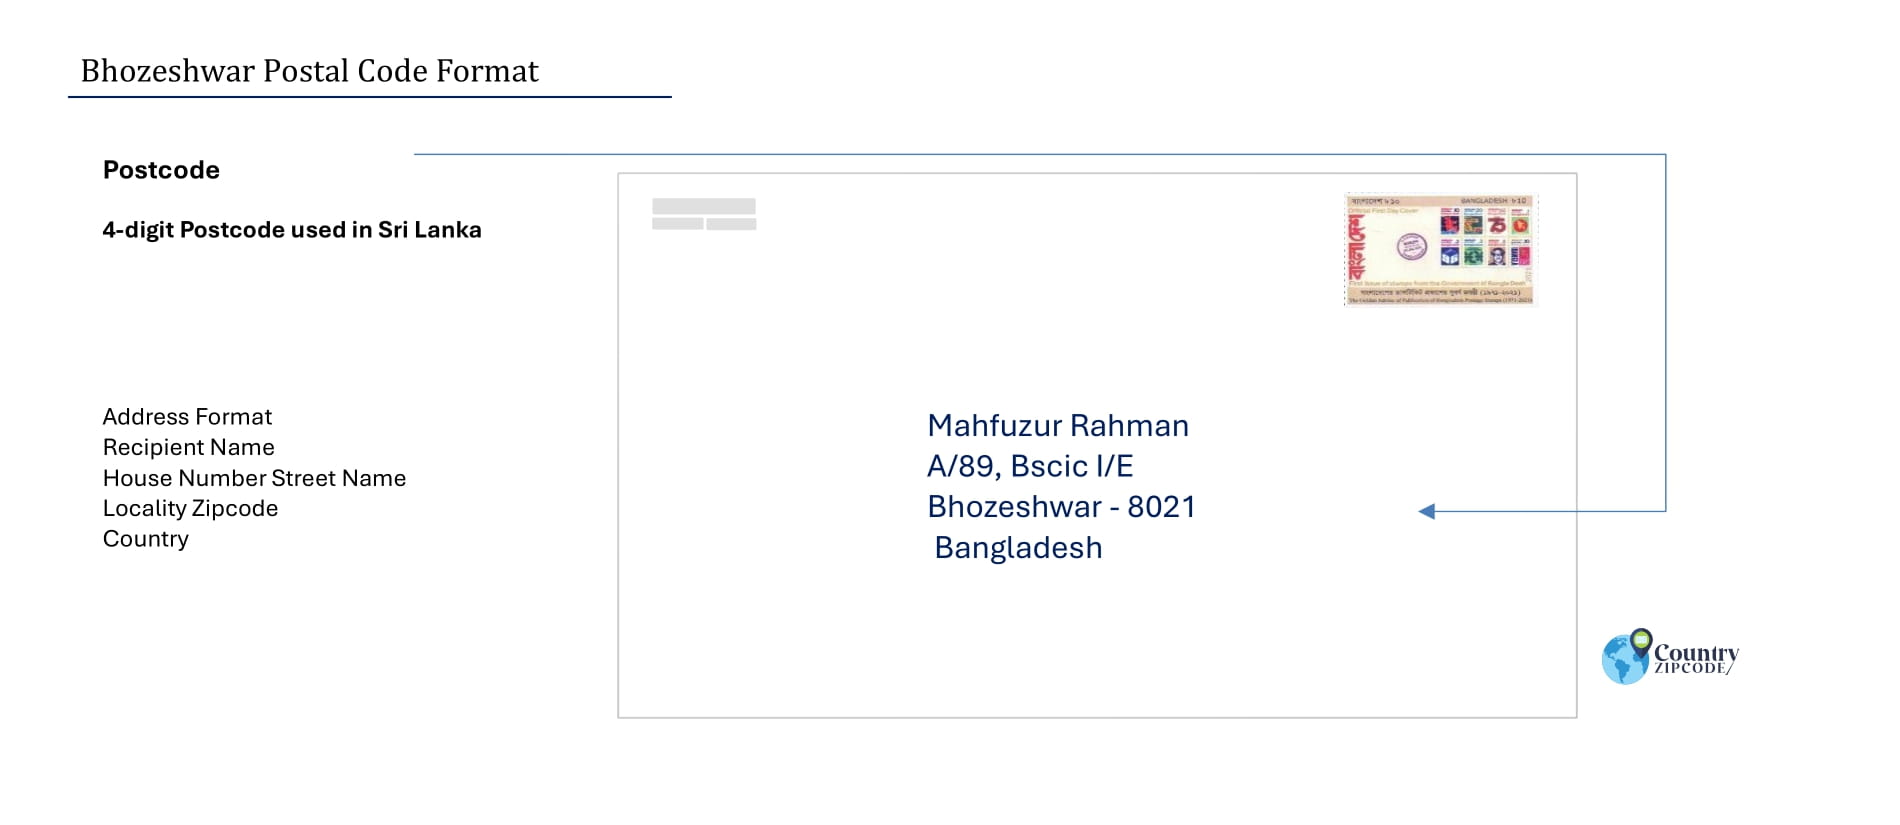 Bhozeshwar Postal code format